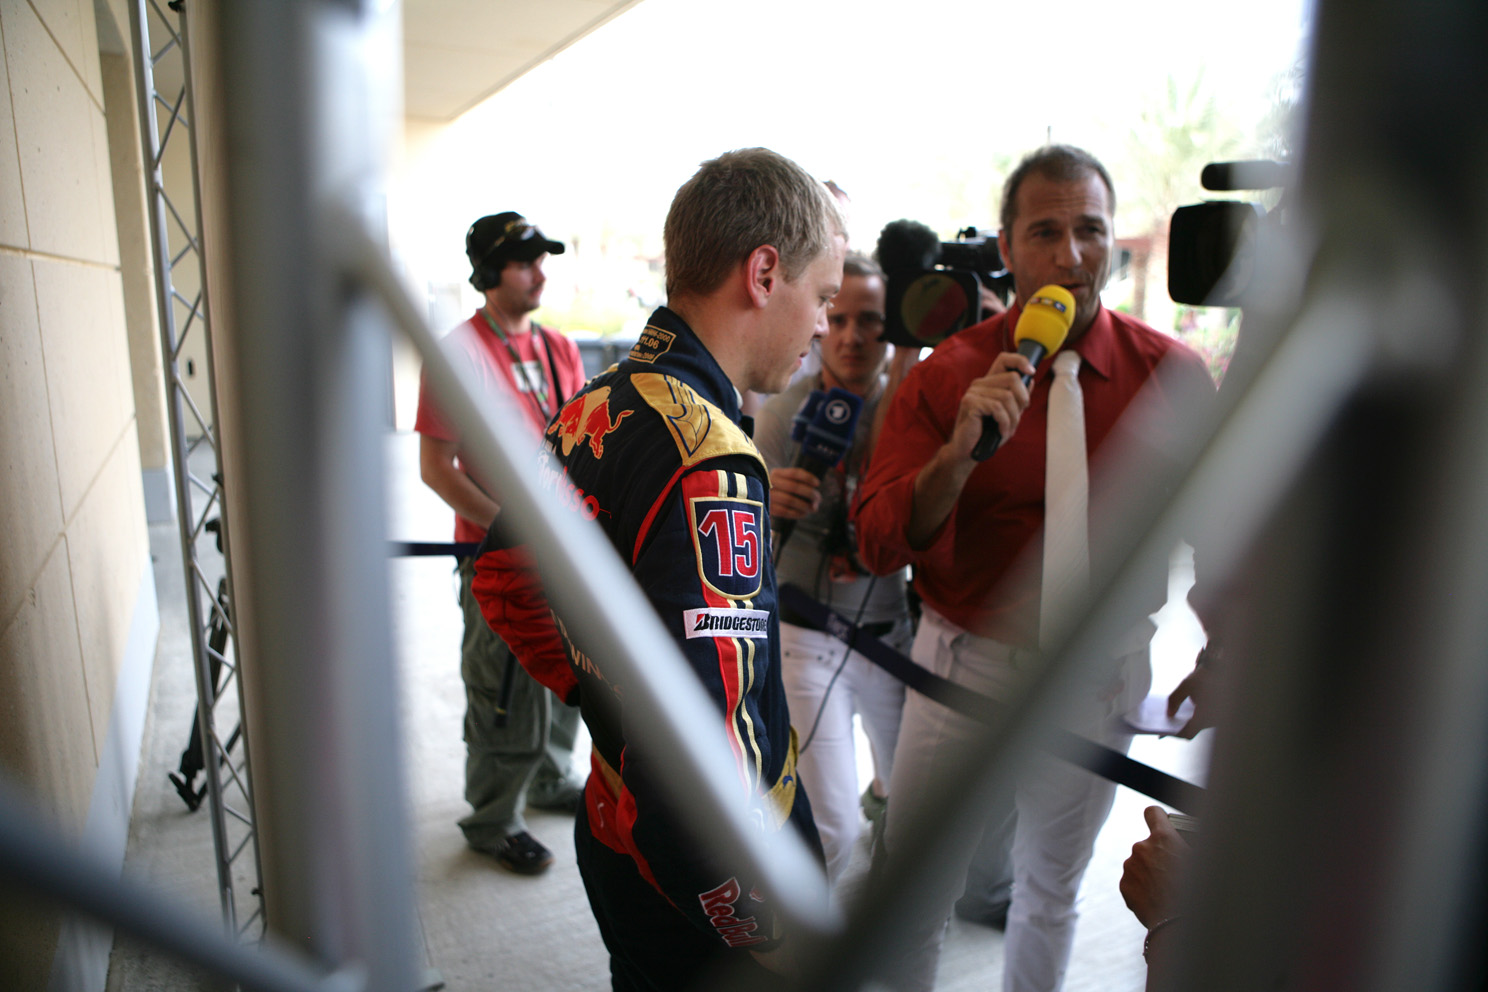 Kai Ebel quizzes the Toro Rosso driver, at the Bahrain Grand Prix